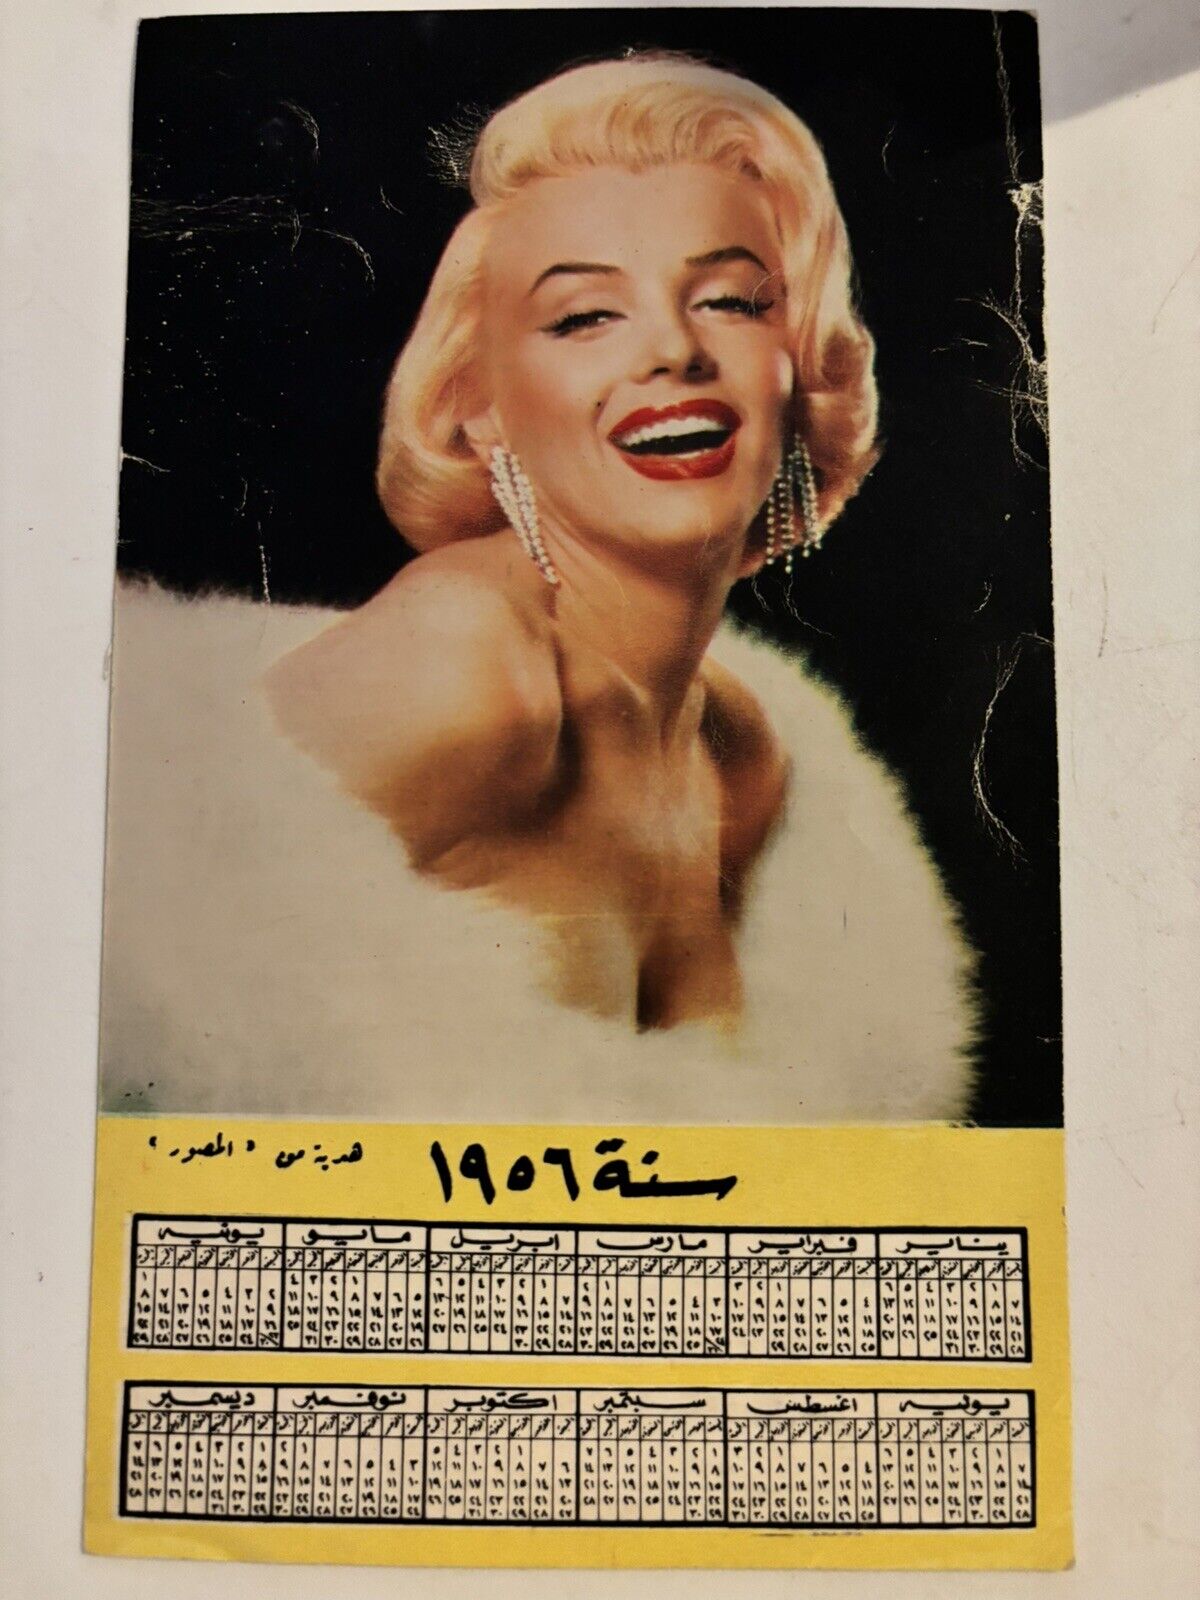 Vintage Marilyn Monroe 1956 Calendar Small Poster